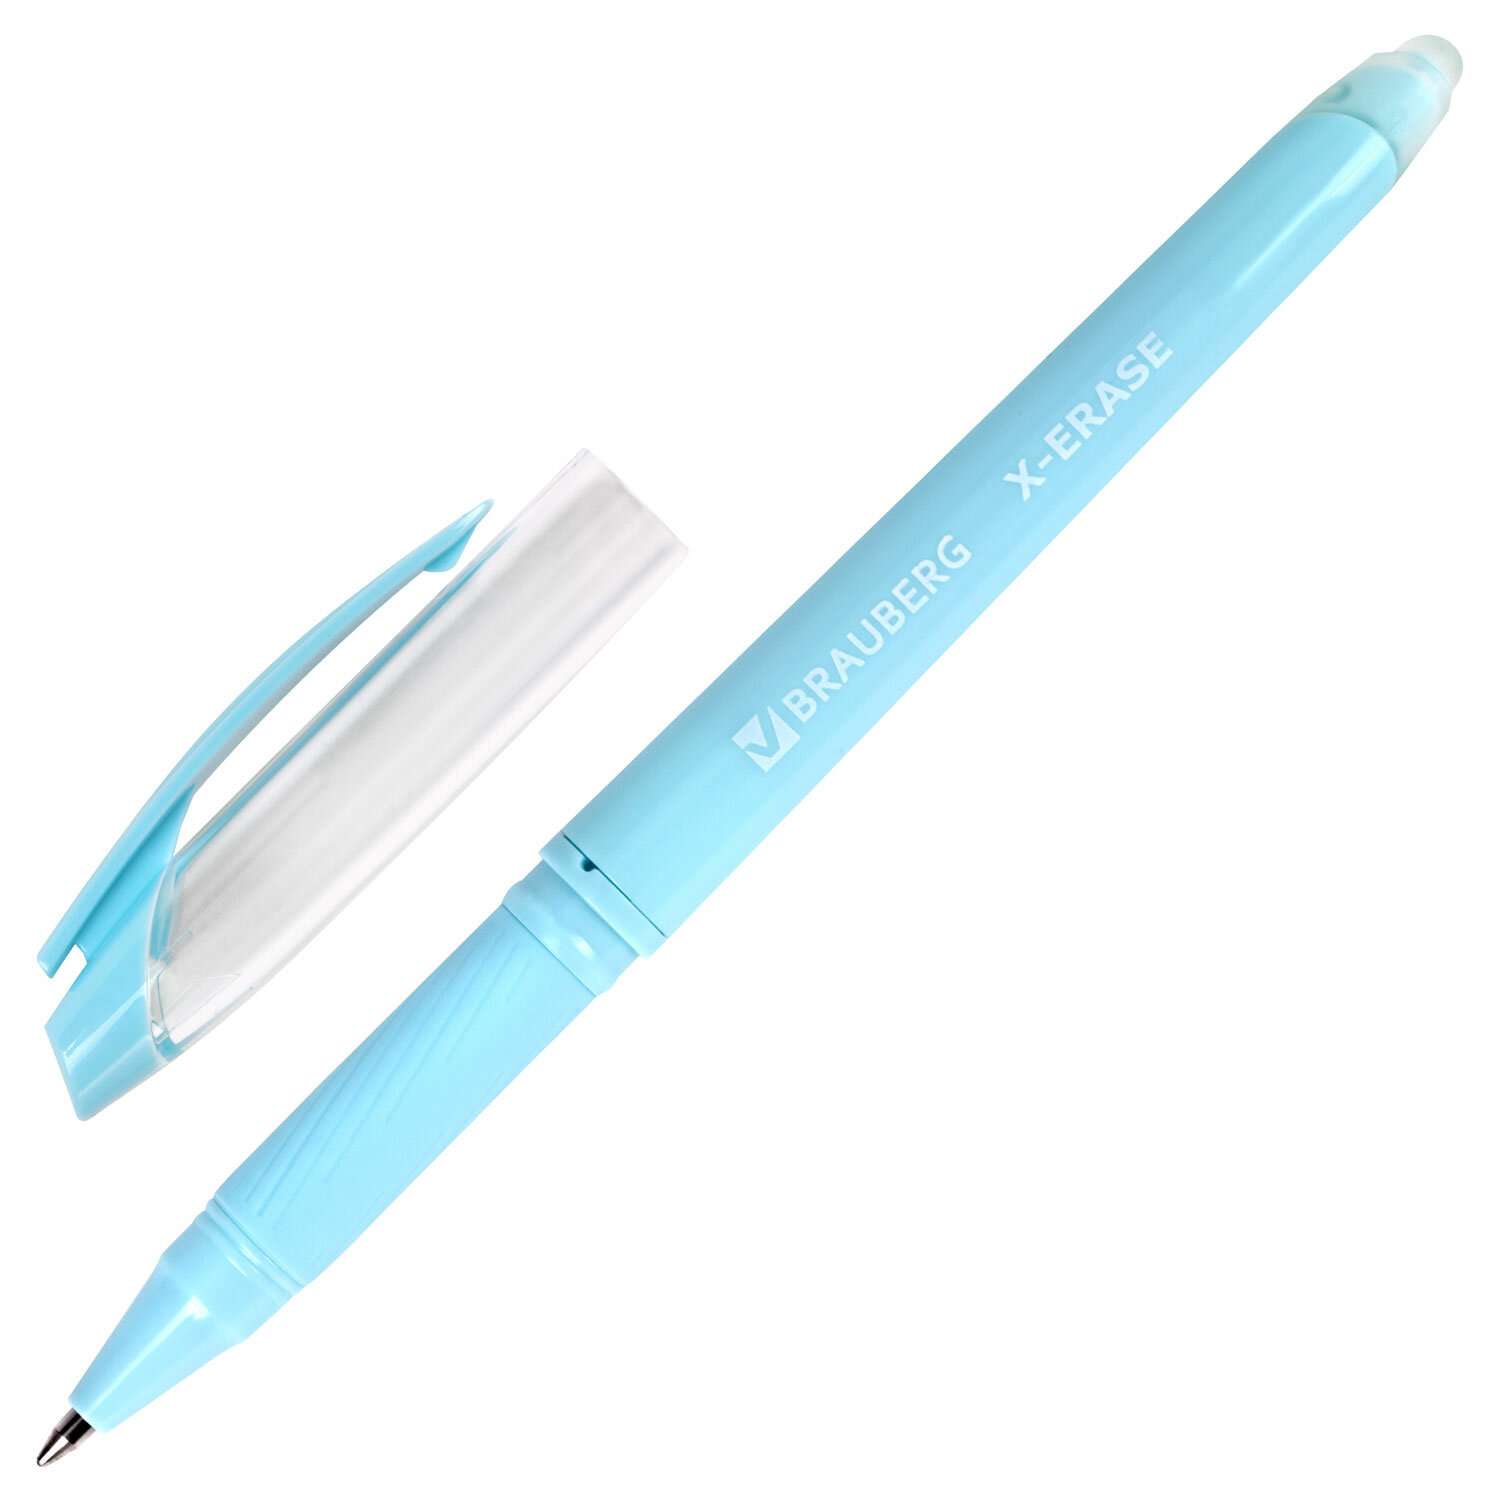 Ручки гелевые Brauberg пиши стирай набор 4 штуки синие - фото 5